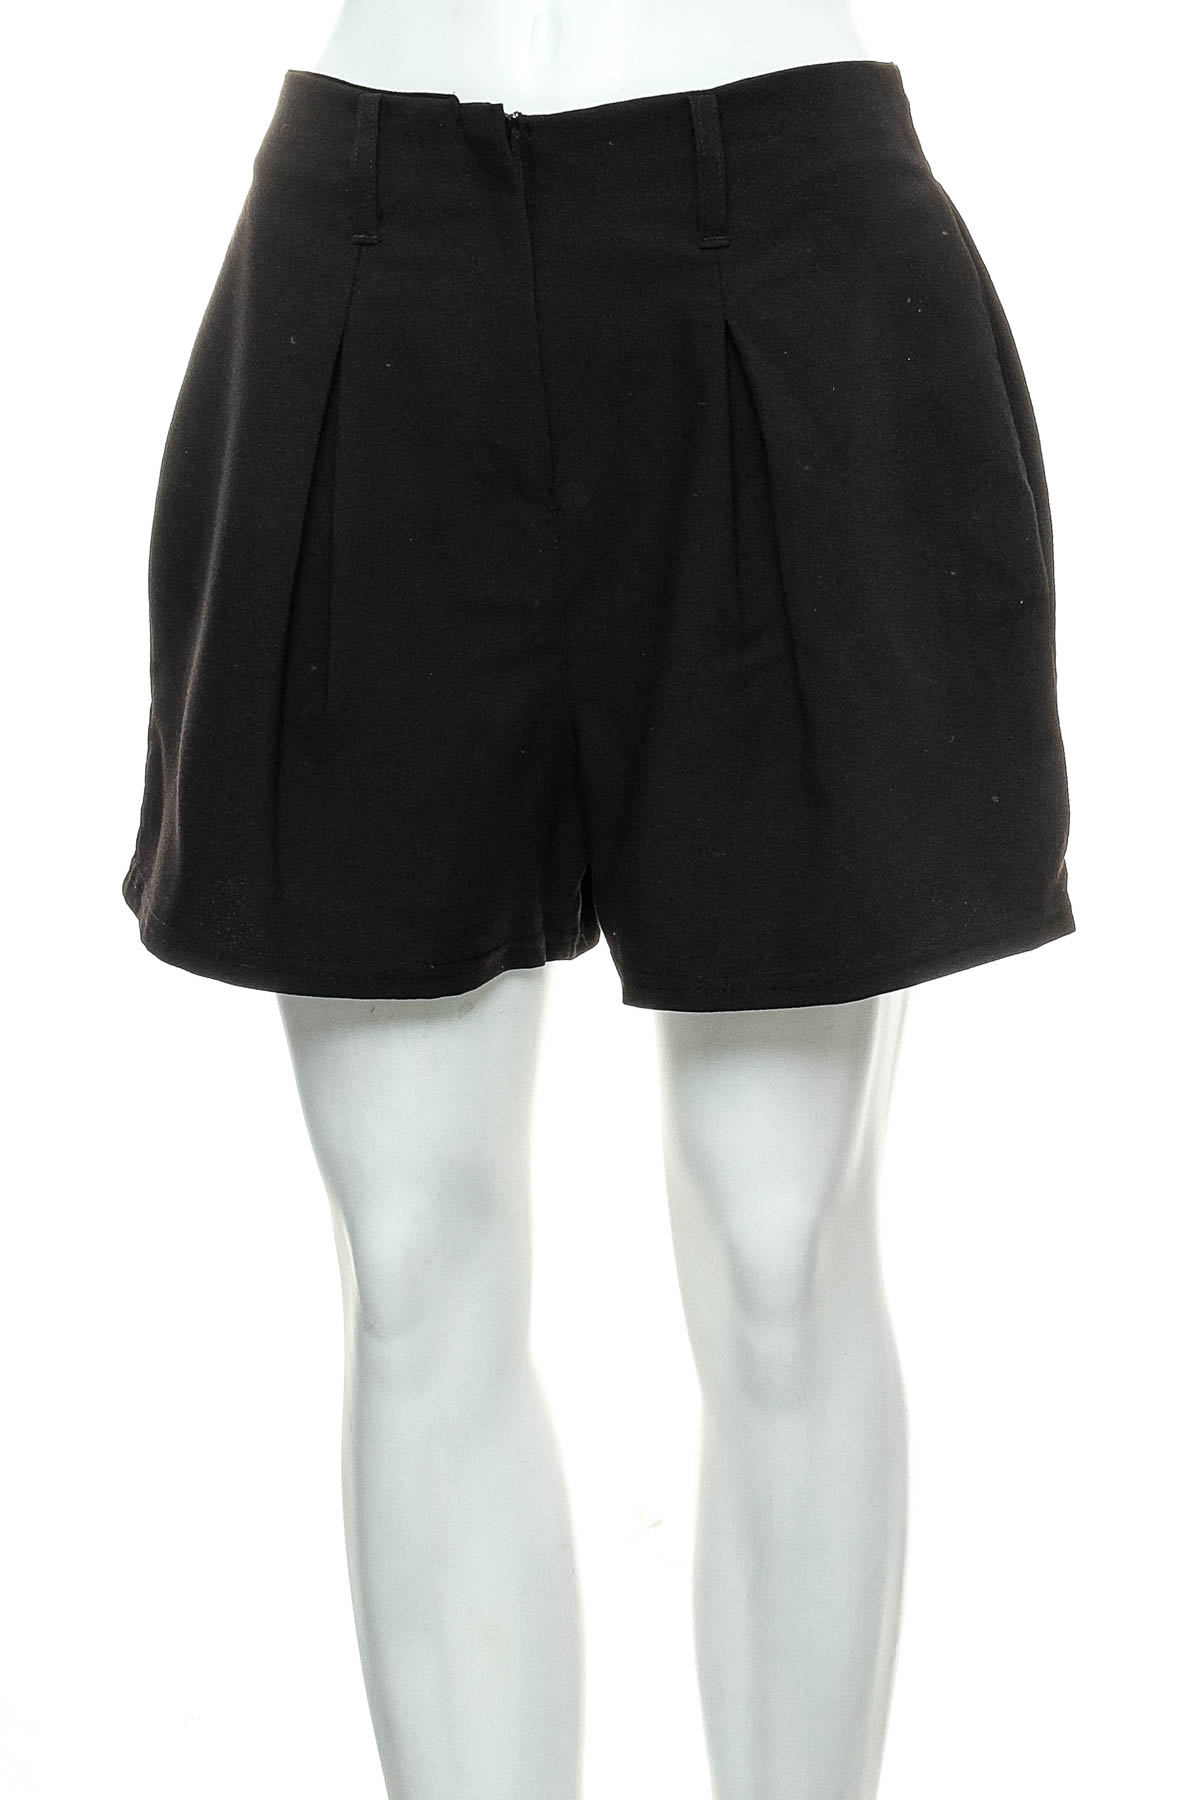 Female shorts - Boohoo - 0